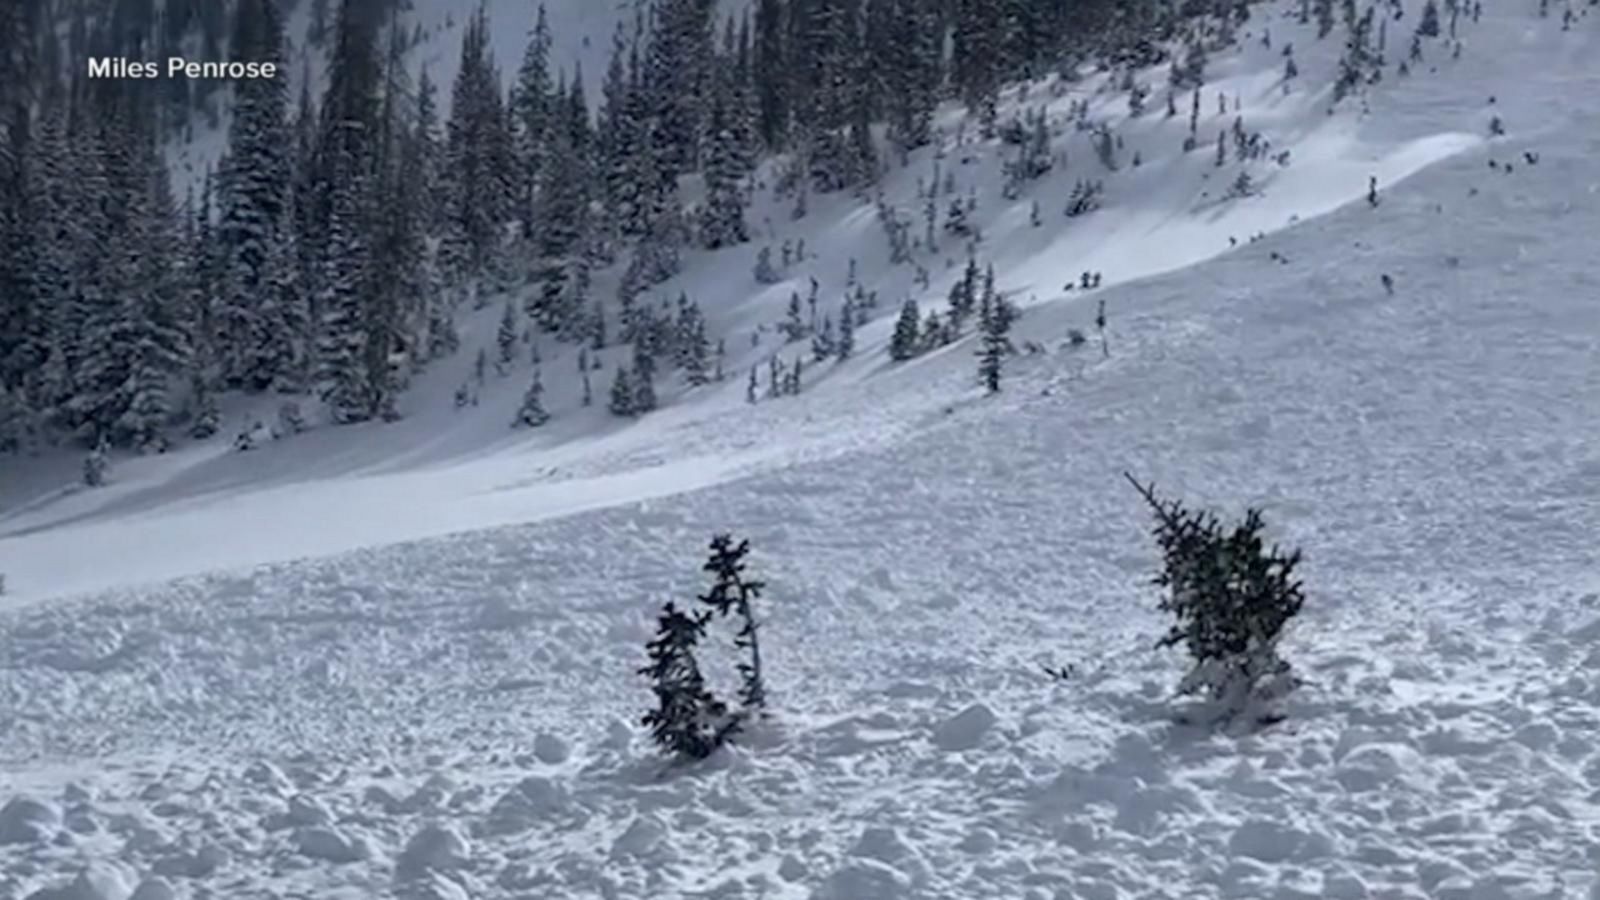 Massive avalanche caught on camera - Good Morning America